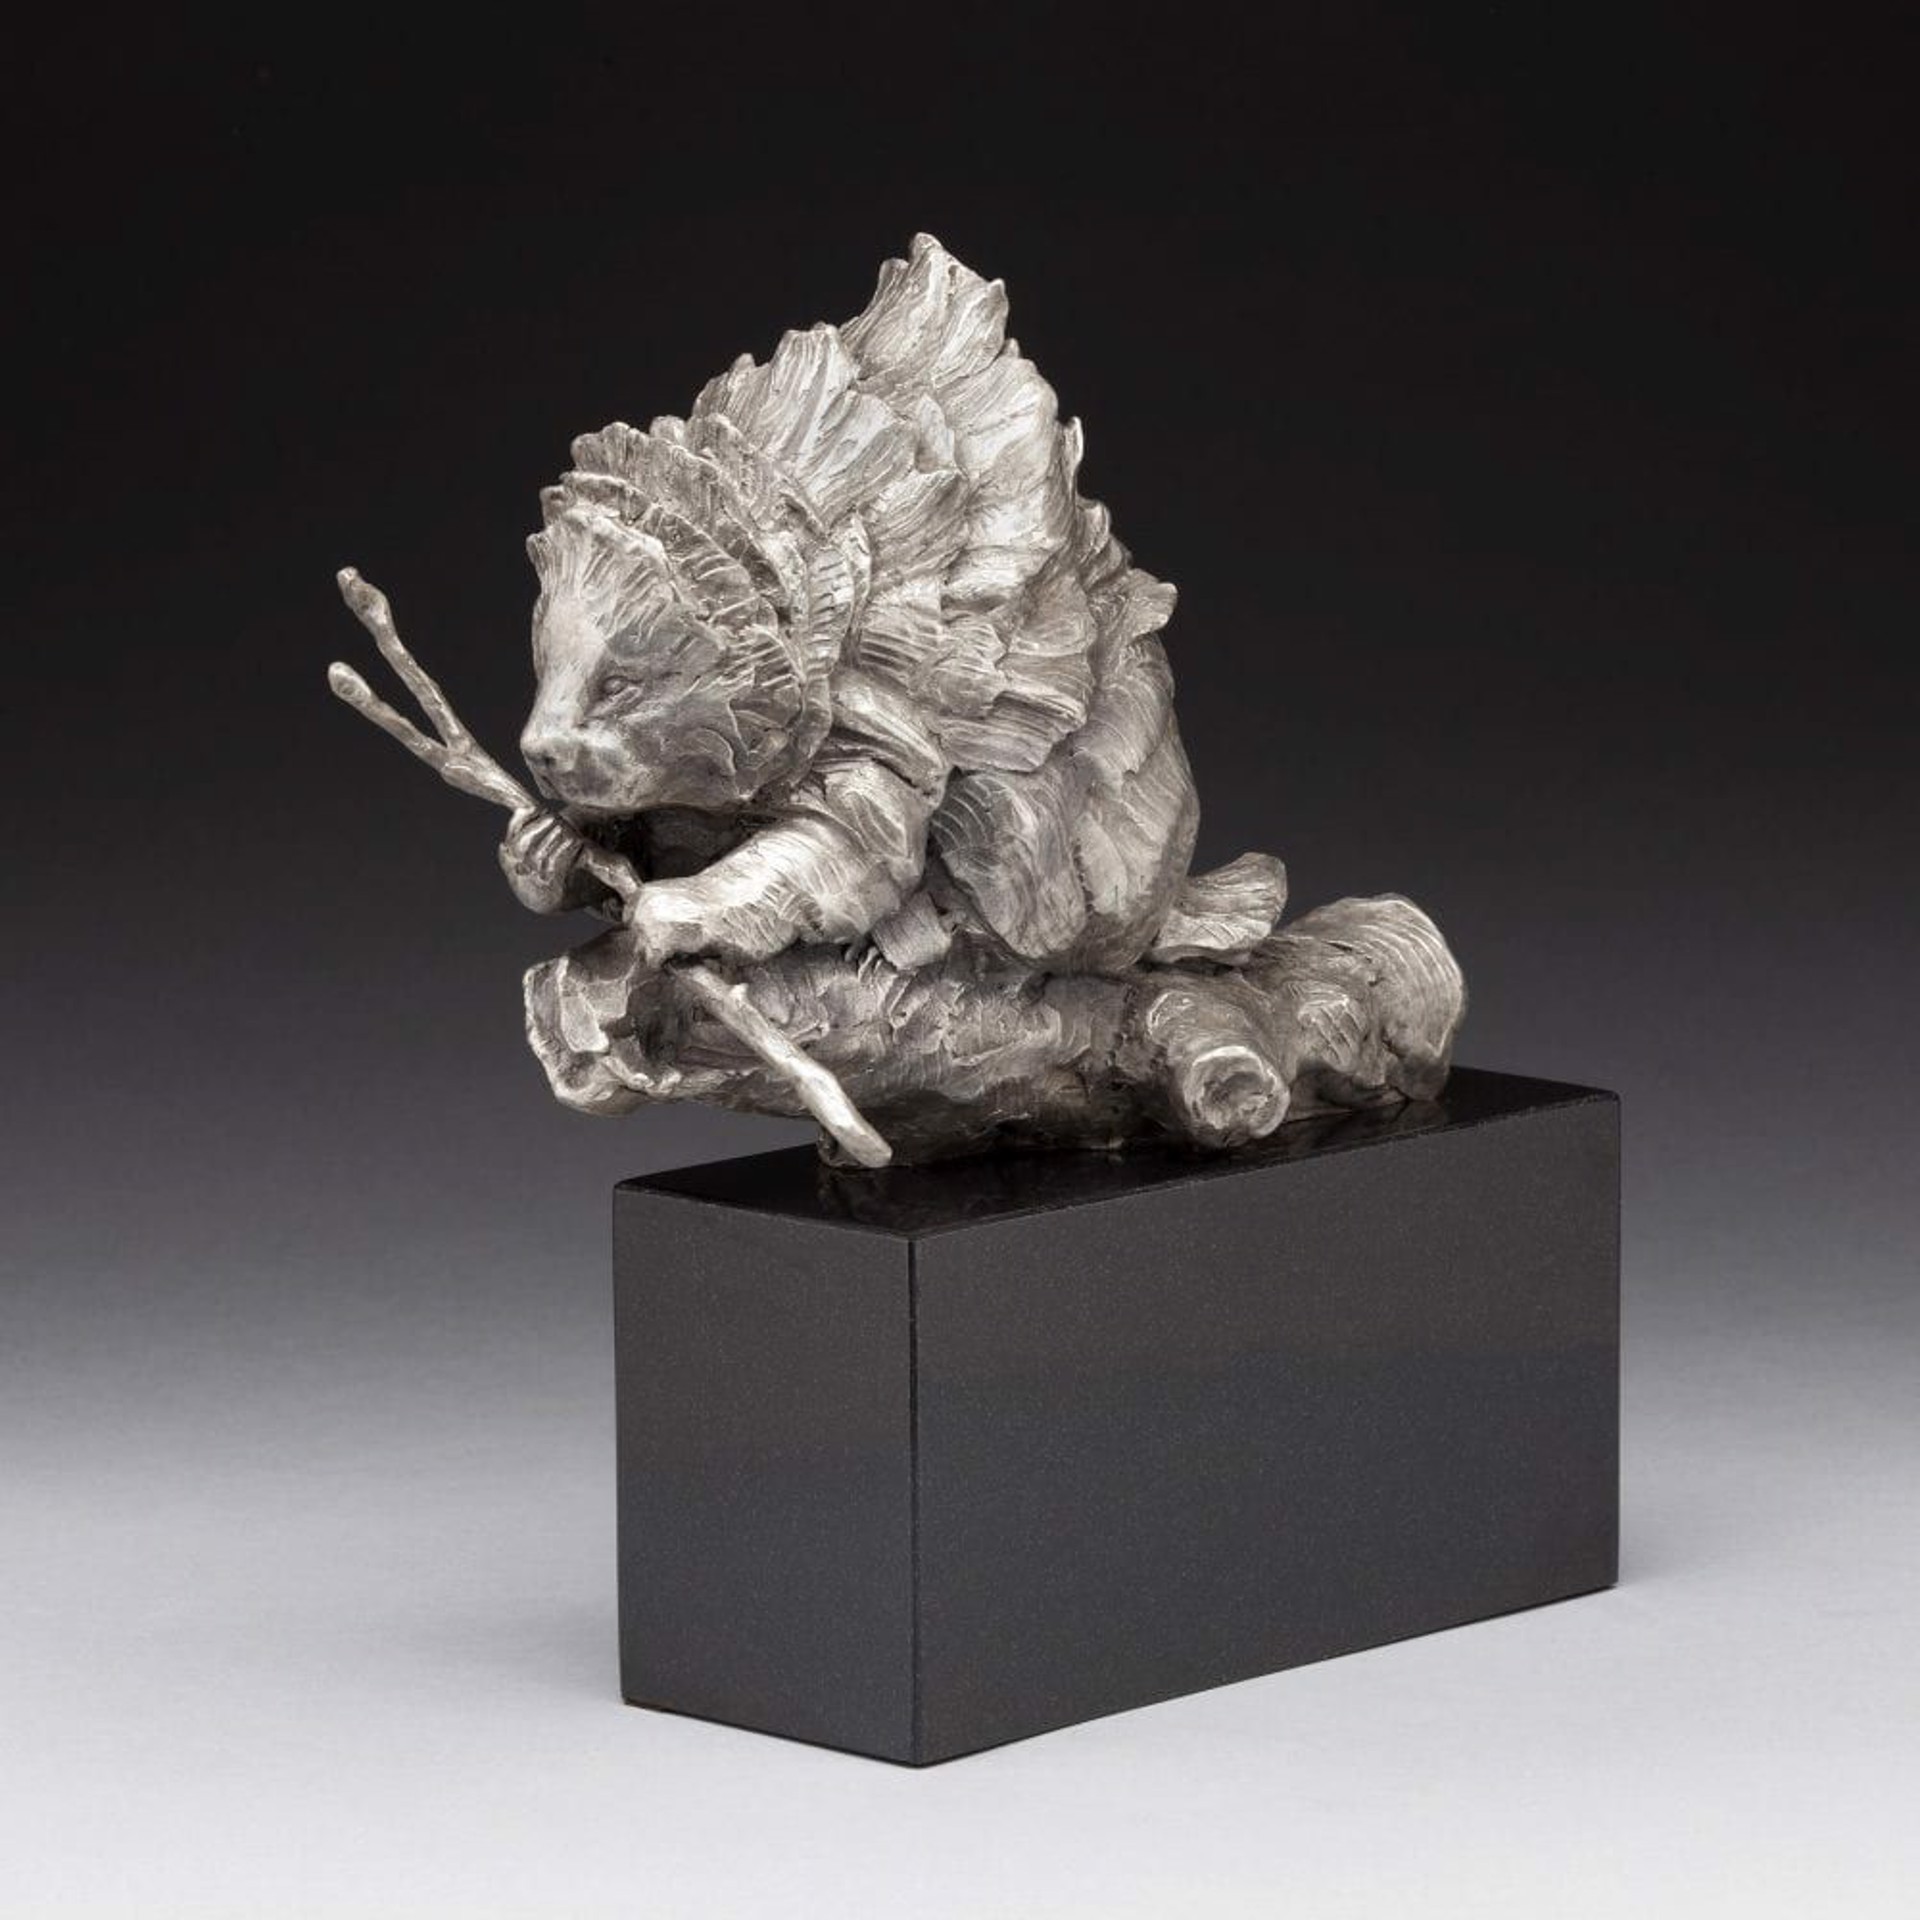 Porcupine by Daniel Glanz (sculptor)